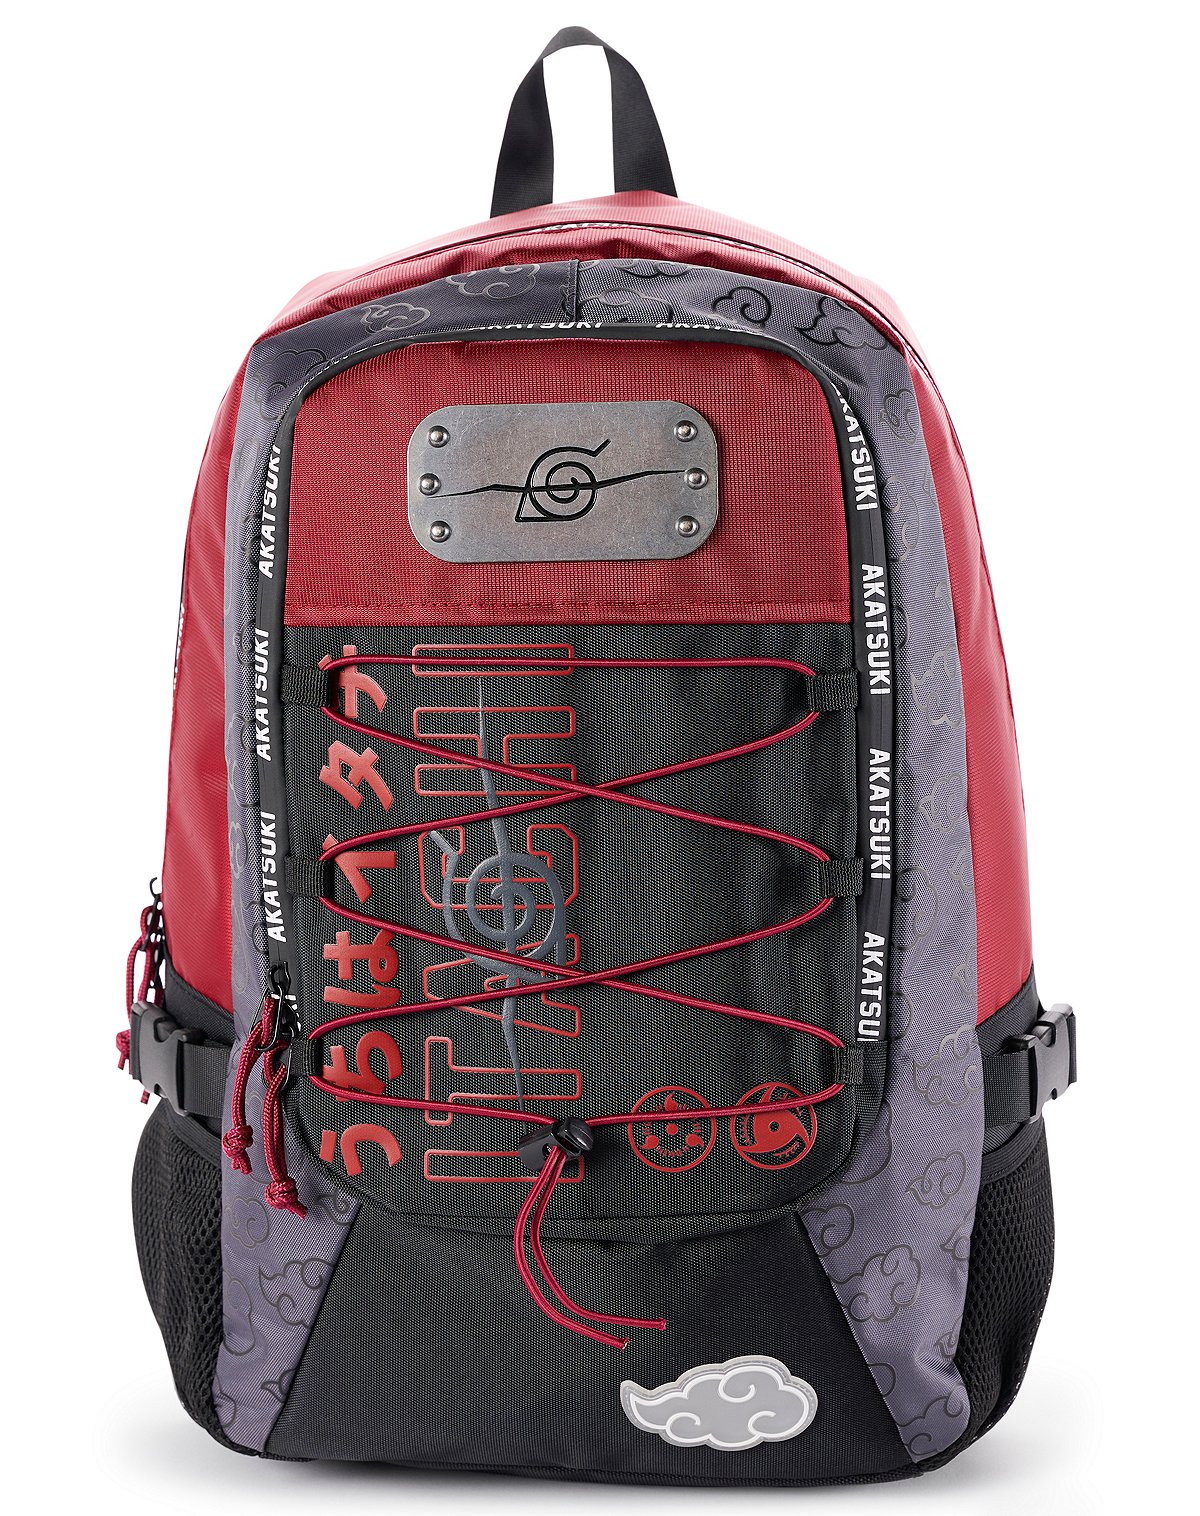 Itachi Built-Up Backpack - Naruto Shippuden